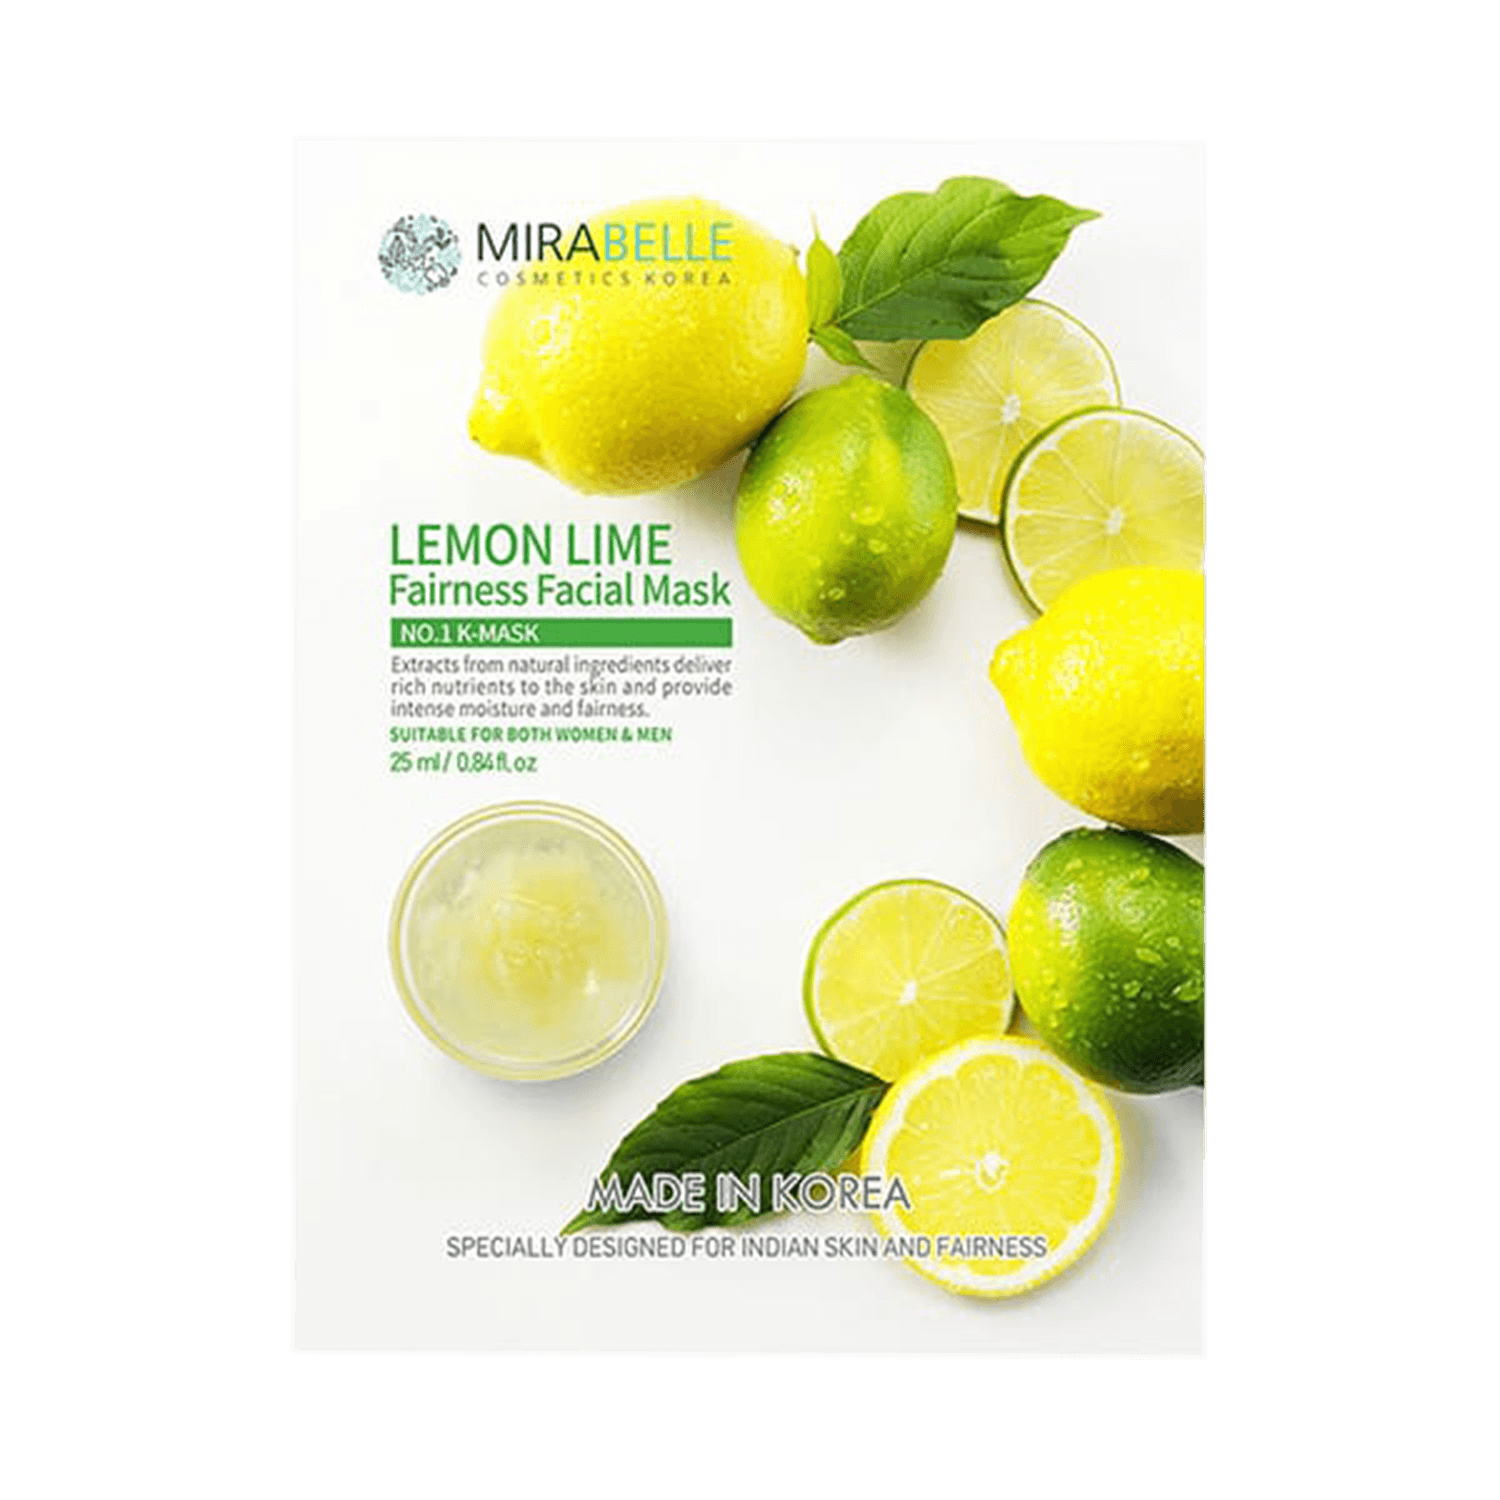 Mirabelle Cosmetics Korea | Mirabelle Cosmetics Korea Lemon Lime Fairness Facial Mask (25ml)